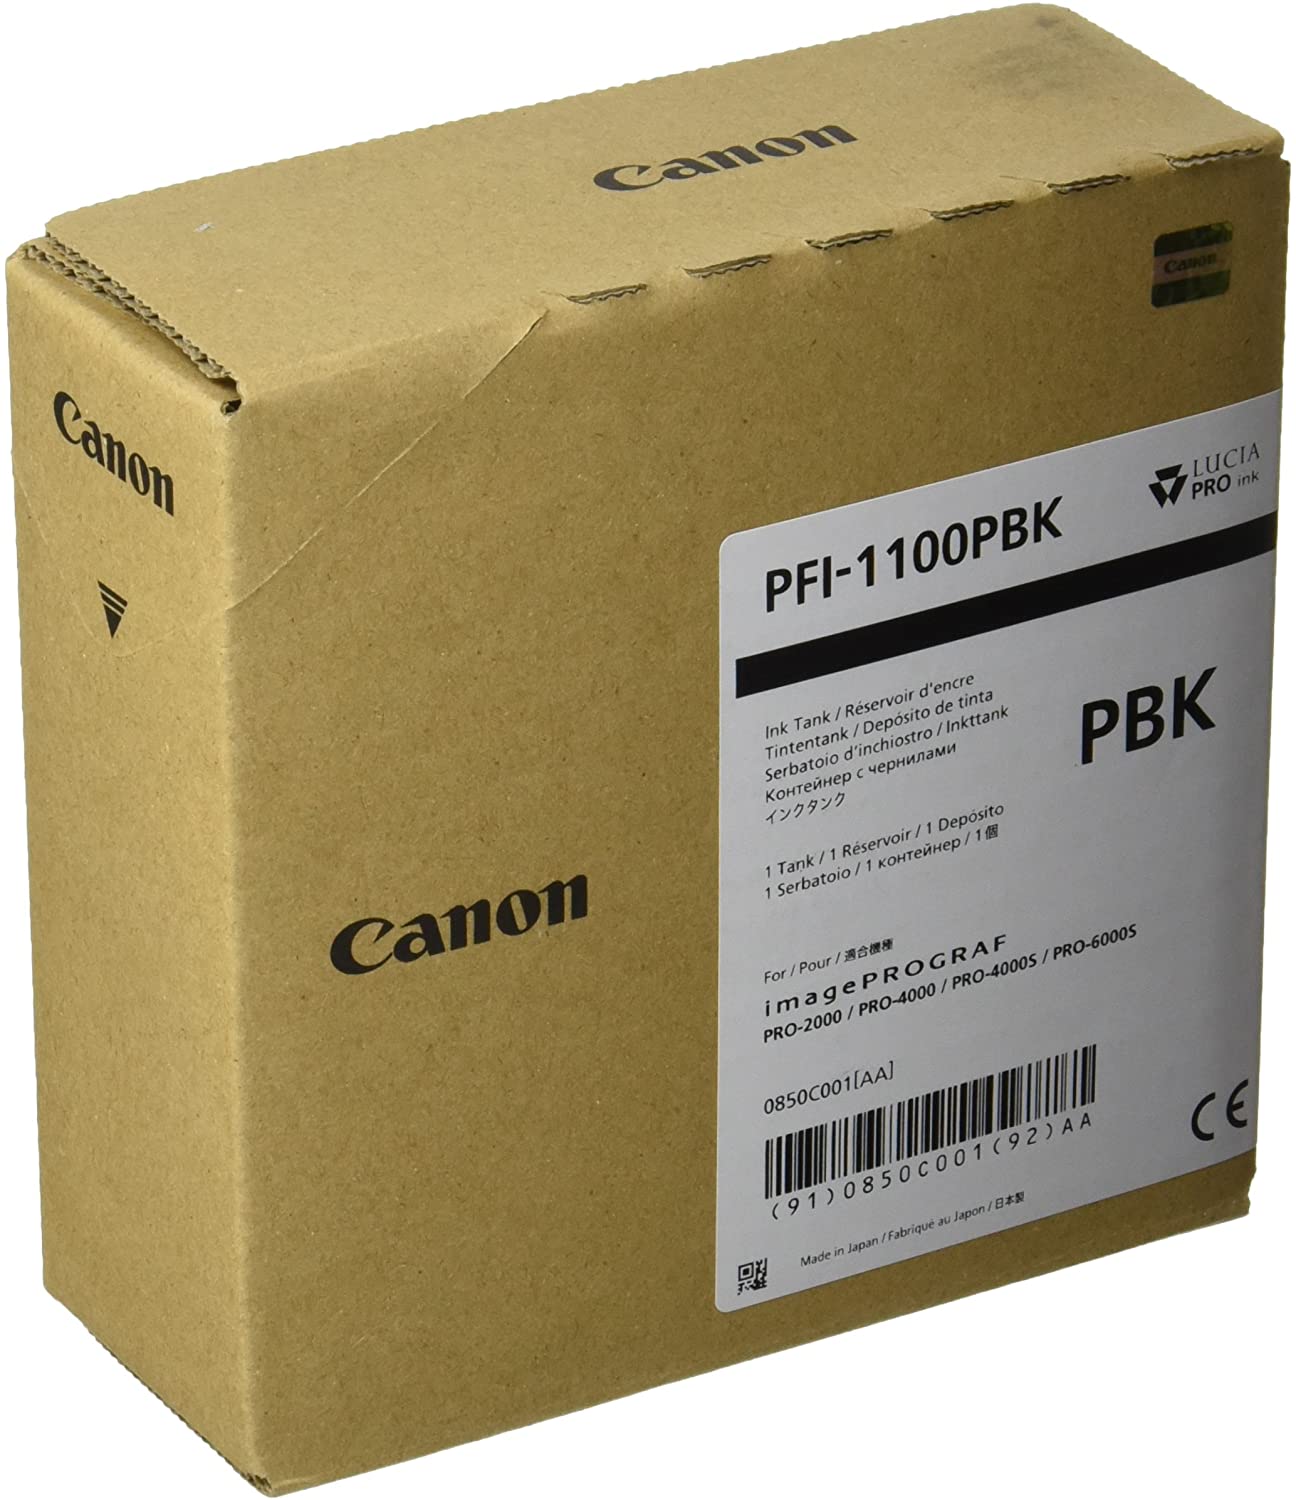 B01GJ9AT6K CANON PFI-1100 Ink Photo Black Standard Capacity 160 ml Pack of 1 iPF Pro2000/4000S/6000S